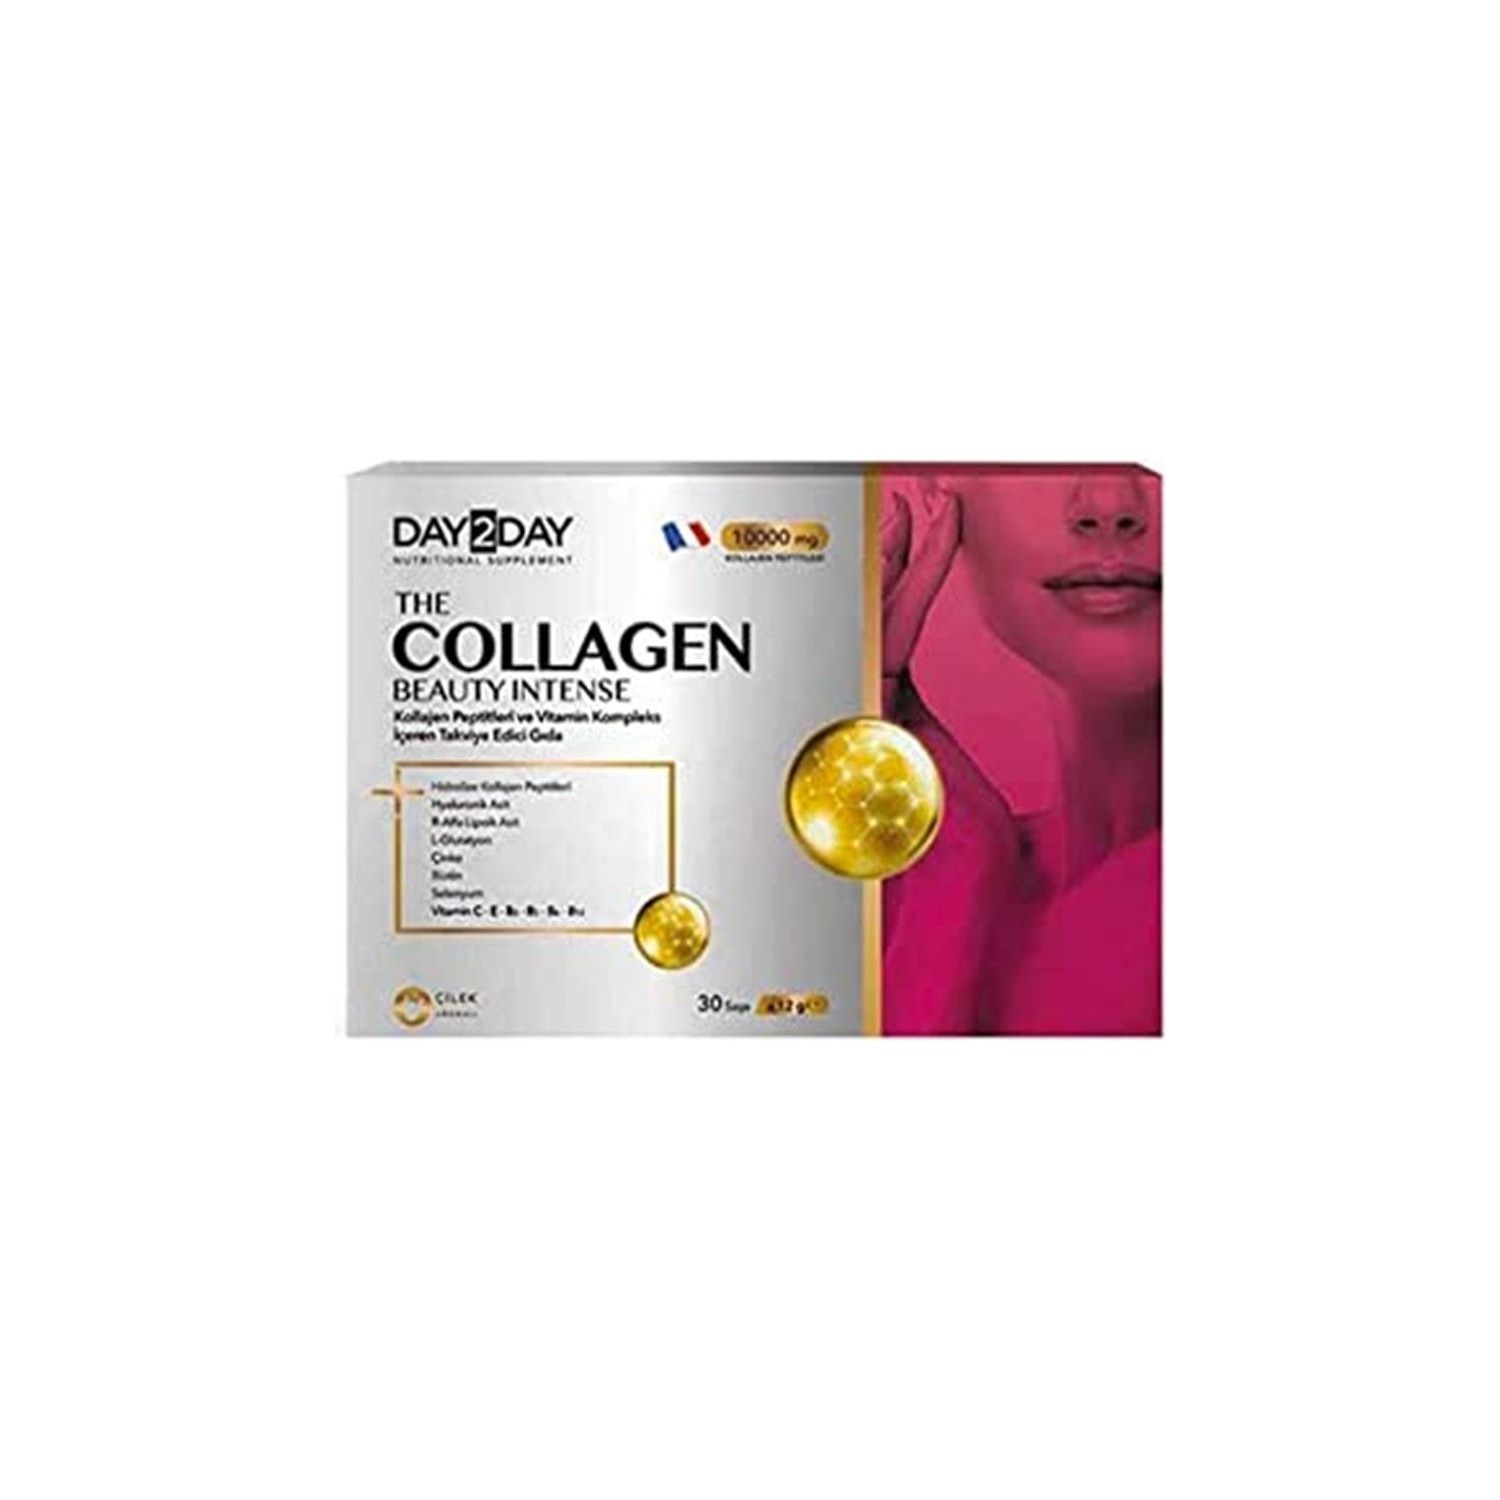 коллаген orzax day 2 day beauty fish collagen 30 пакетиков Коллаген Orzax DAY2DAY Beauty Intense, 30 пакетиков